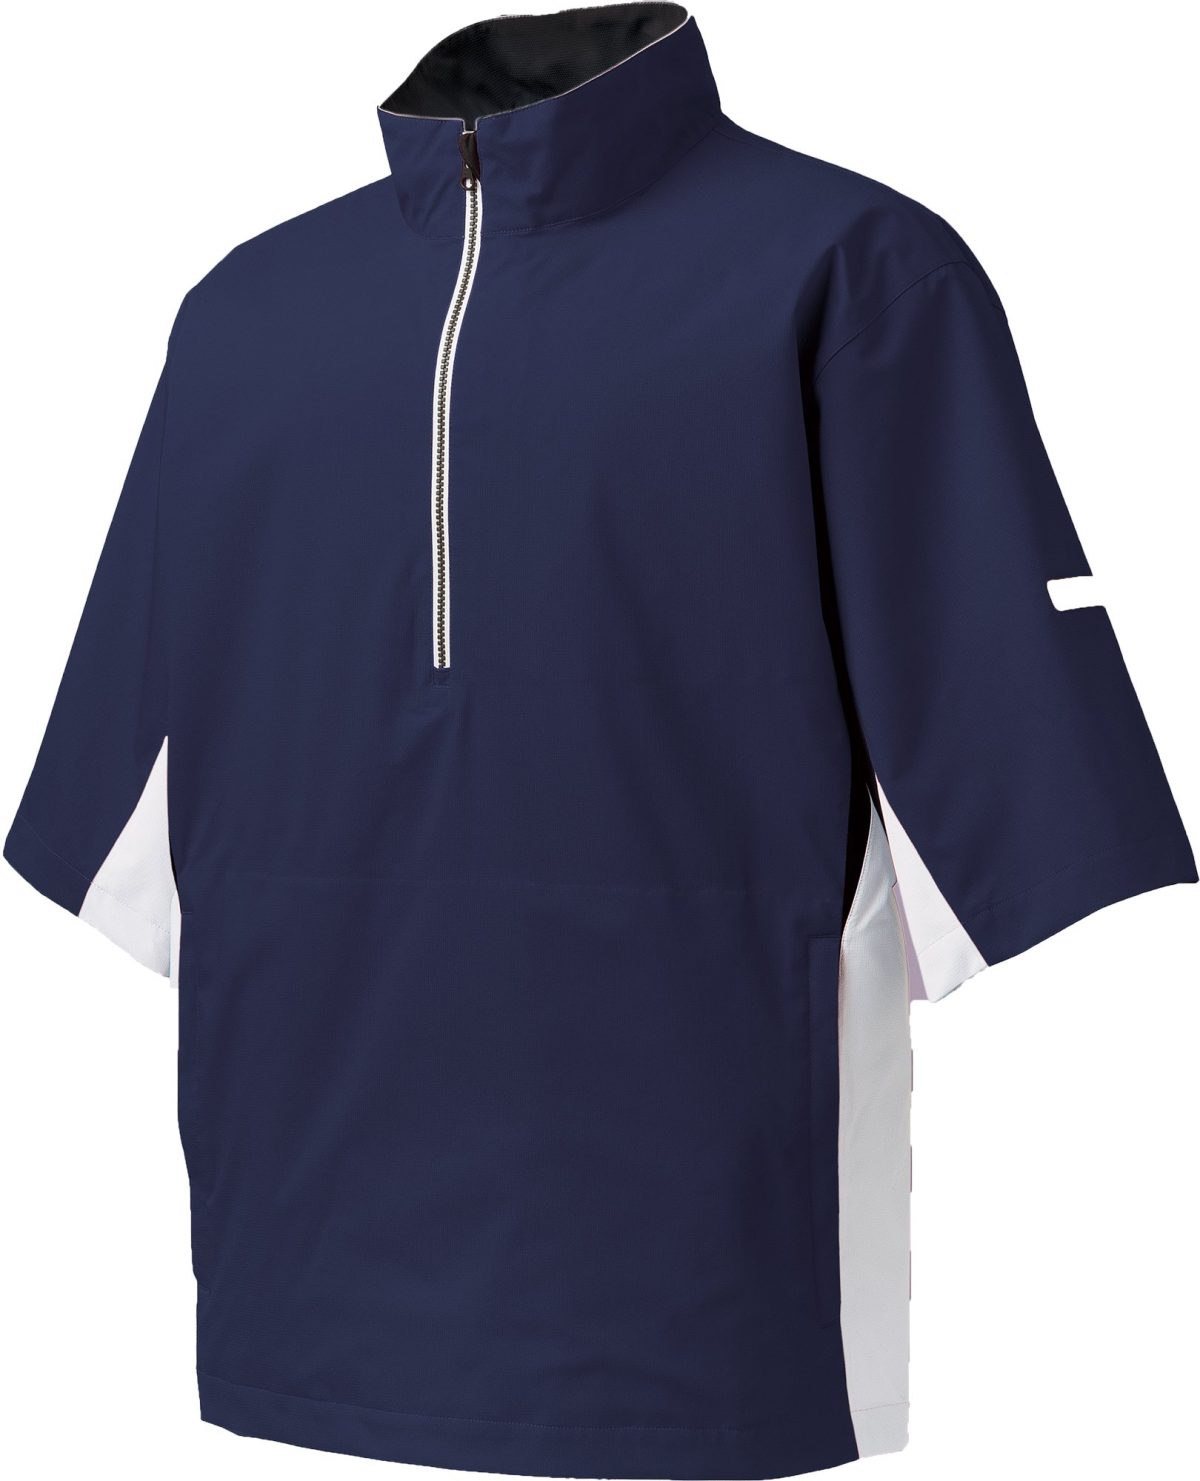 FootJoy Men's Hydrolite Short Sleeve Golf Rain Shirt, 100% Polyester in Navy/White/Black, Size S